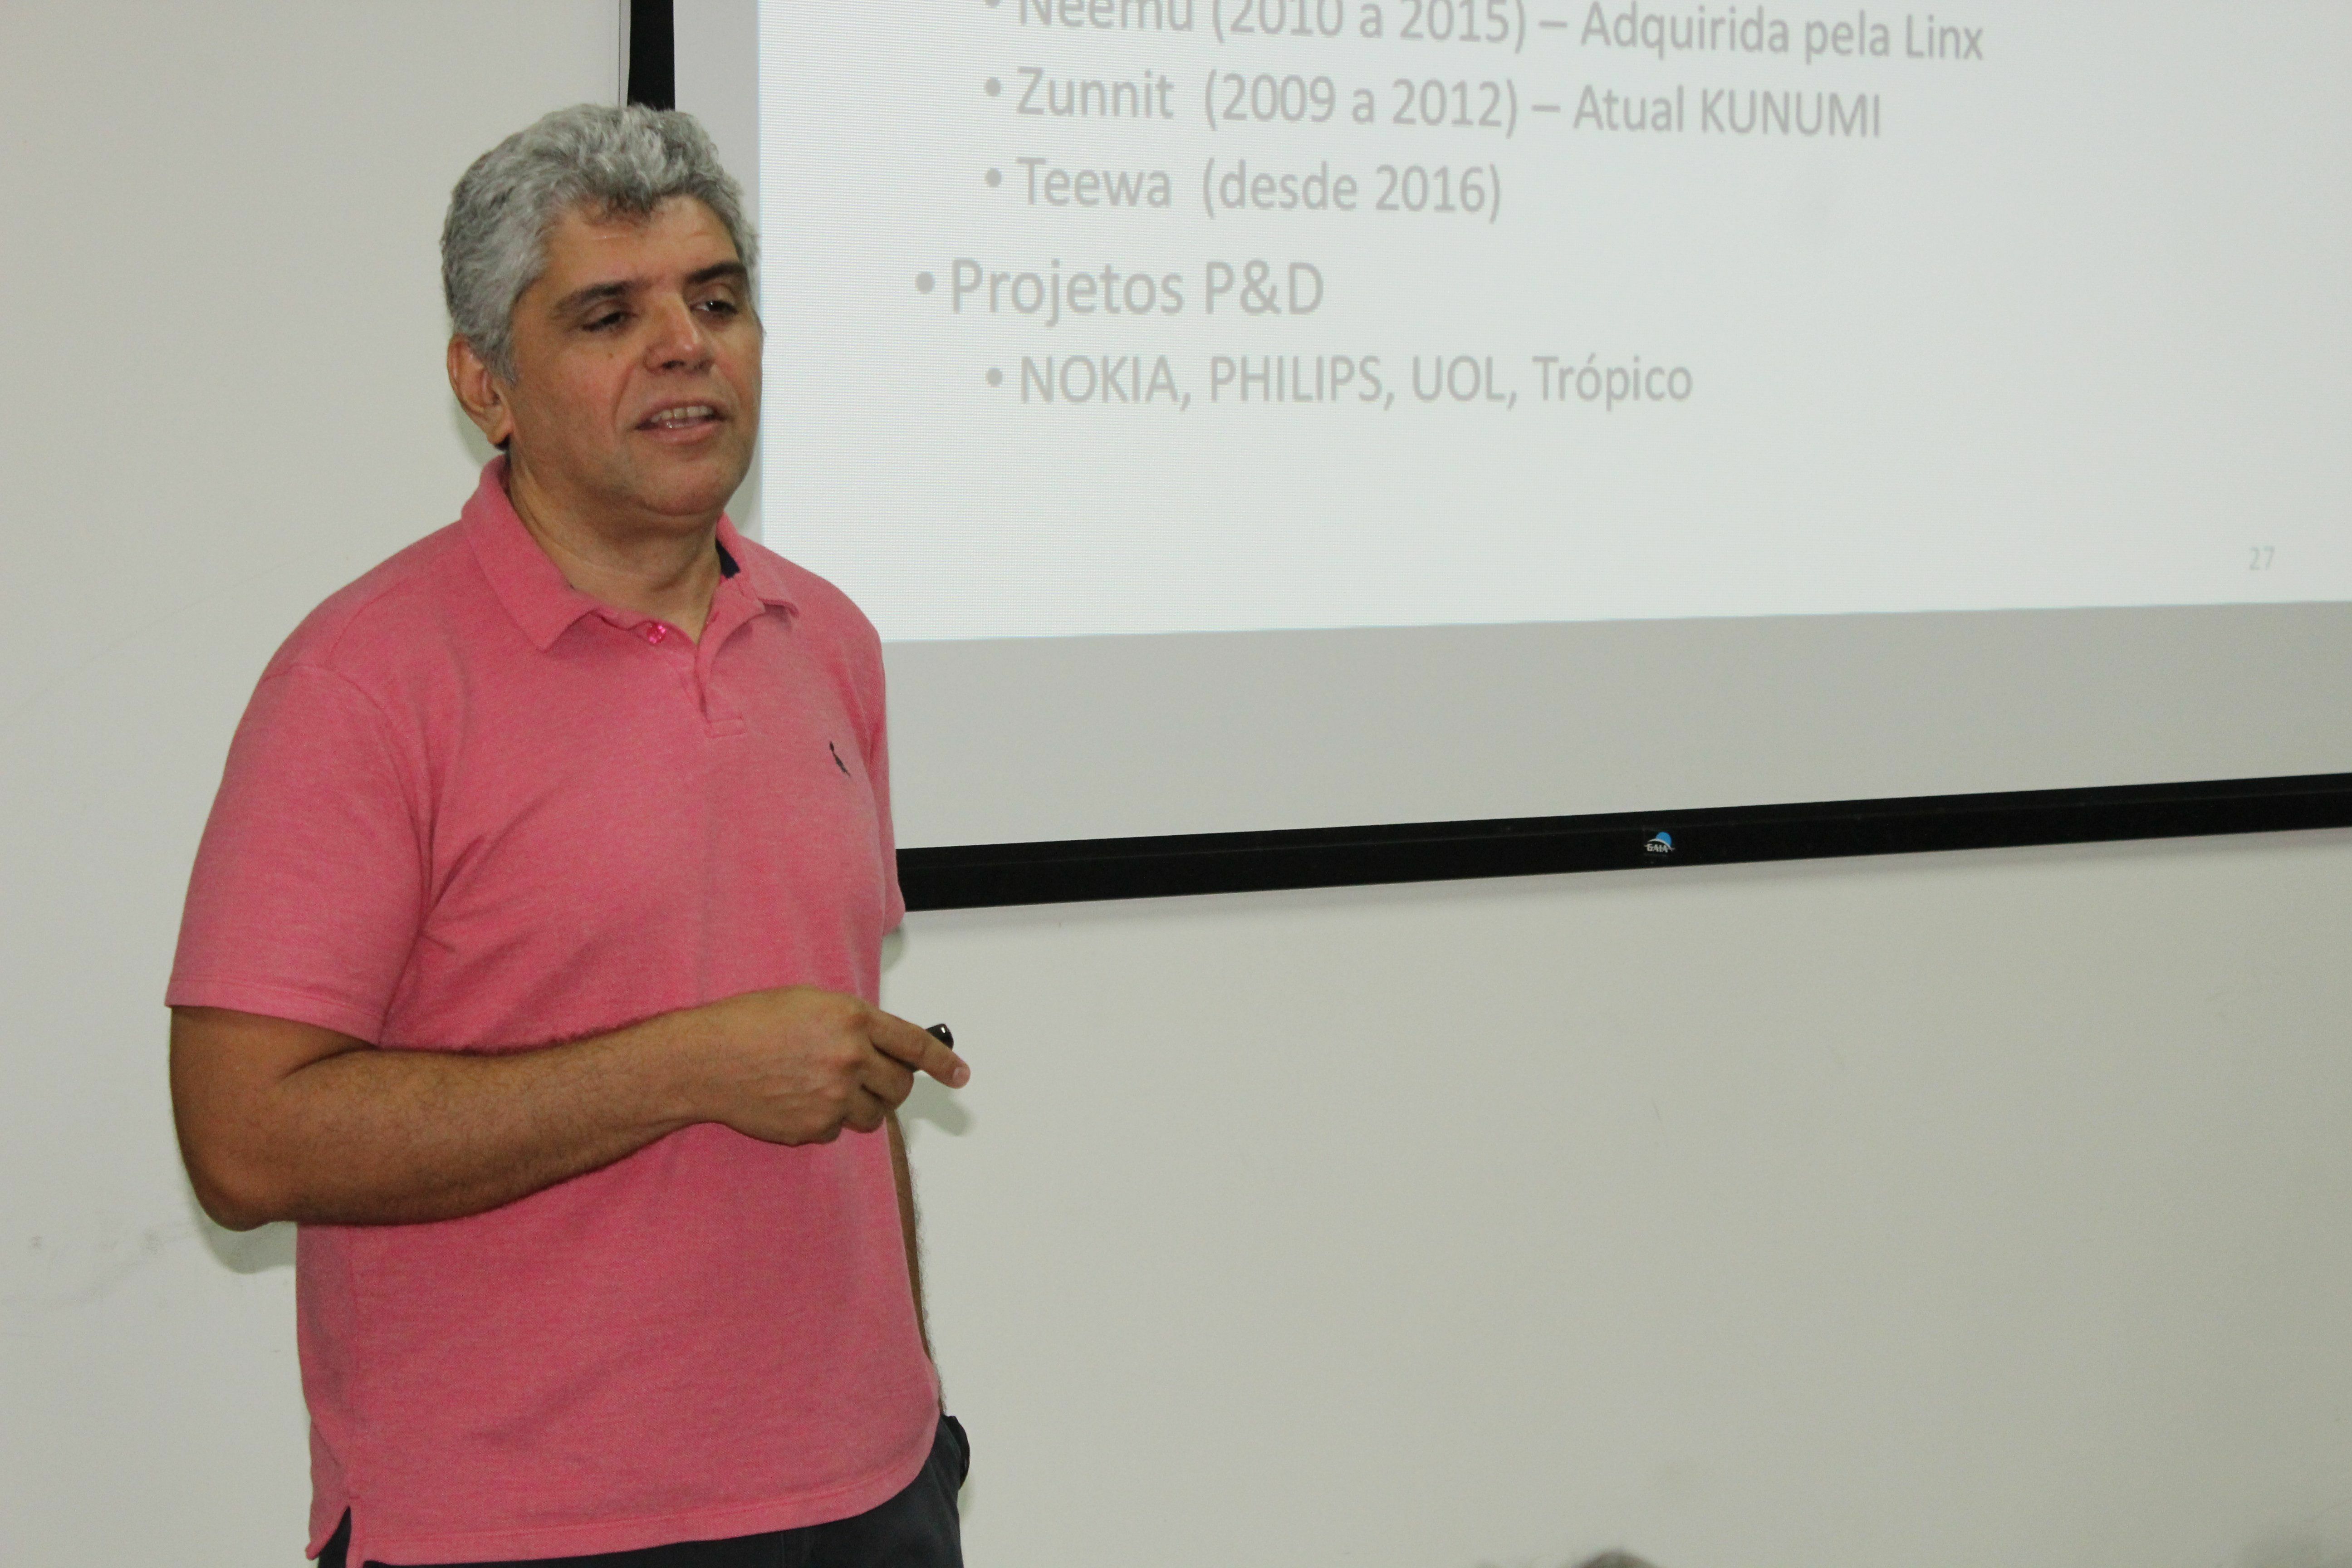 Professor Altigran da Silva